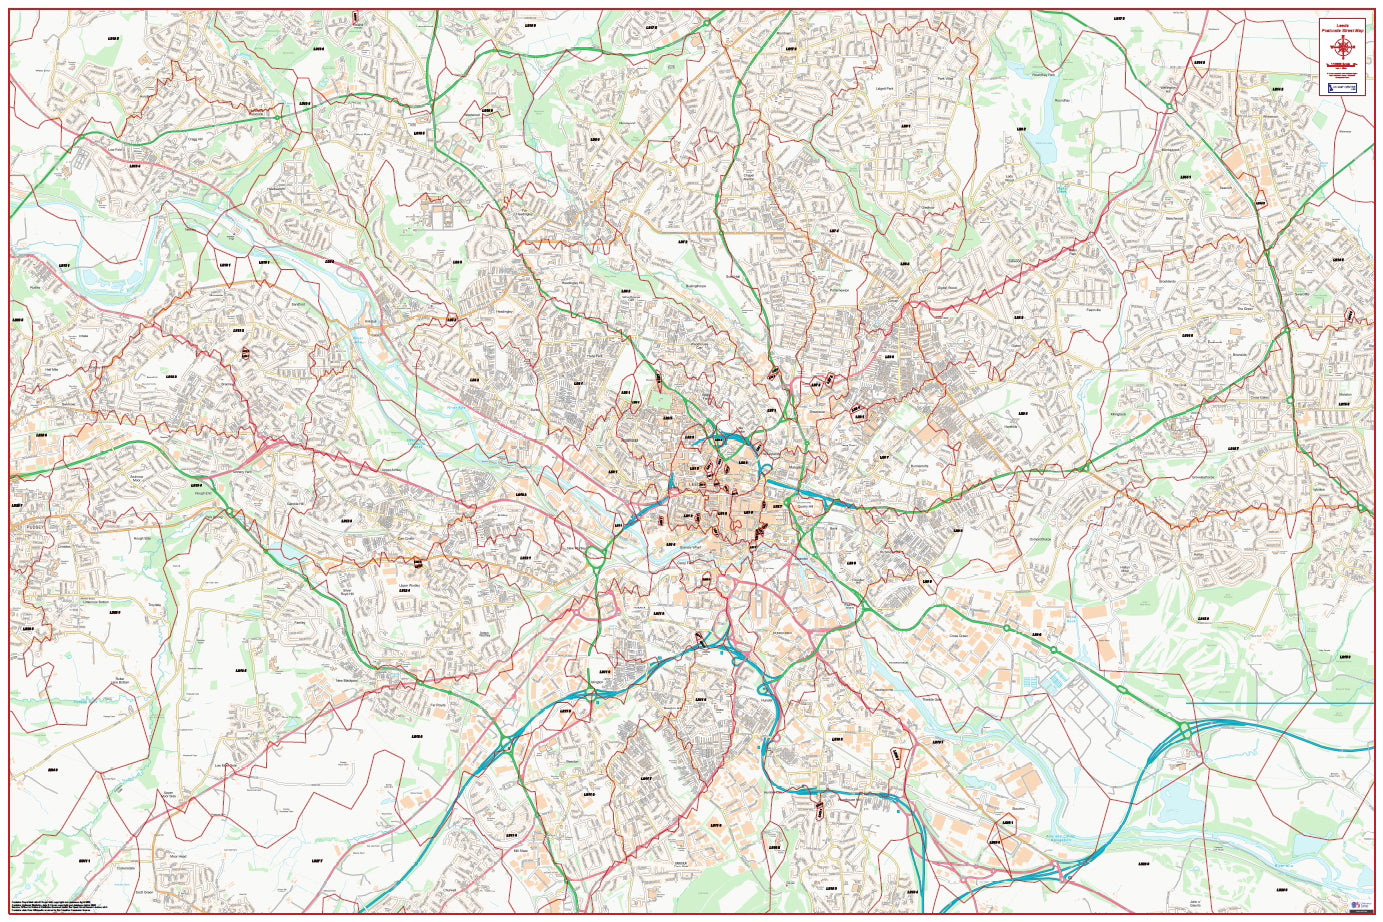 Central Leeds Postcode City Street Map - Digital Download